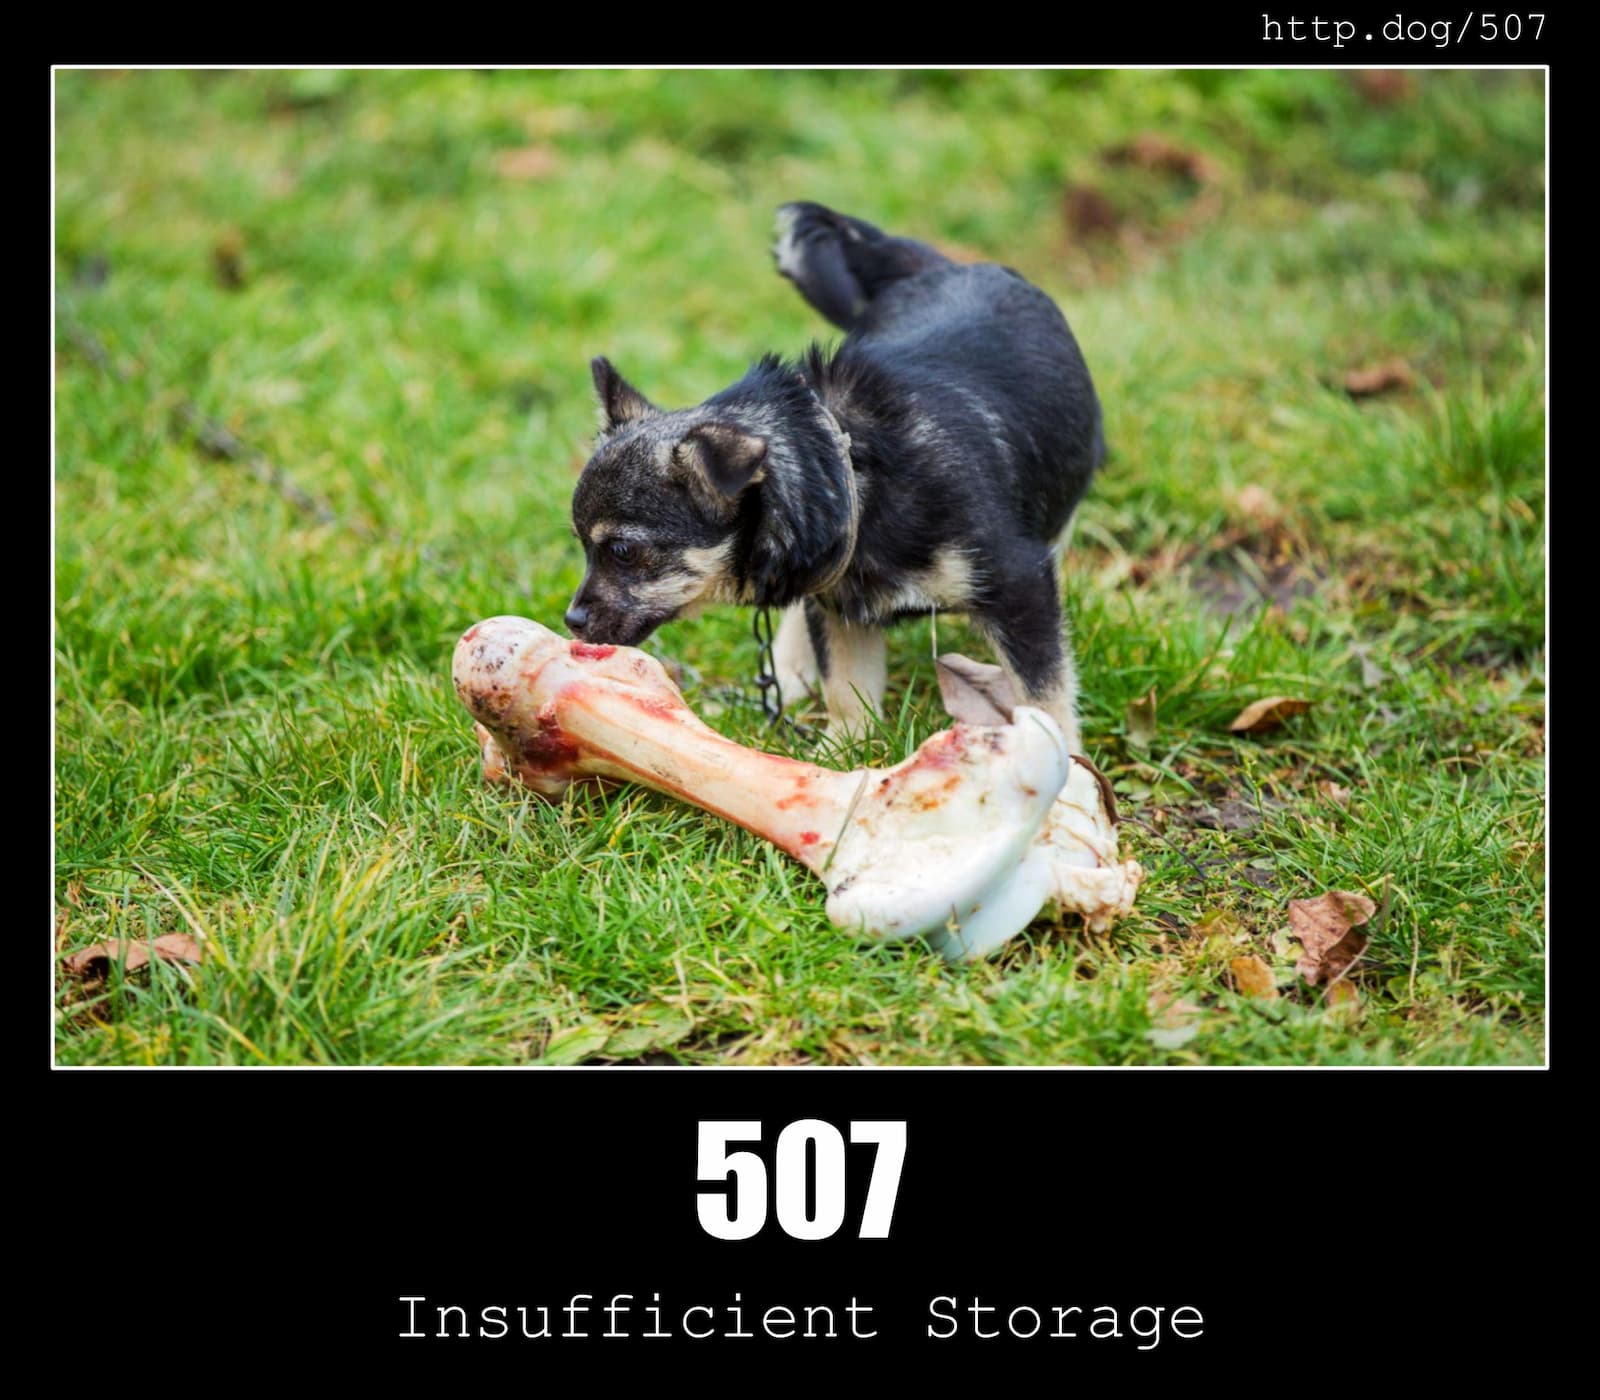 HTTP Status Code 507 Insufficient Storage